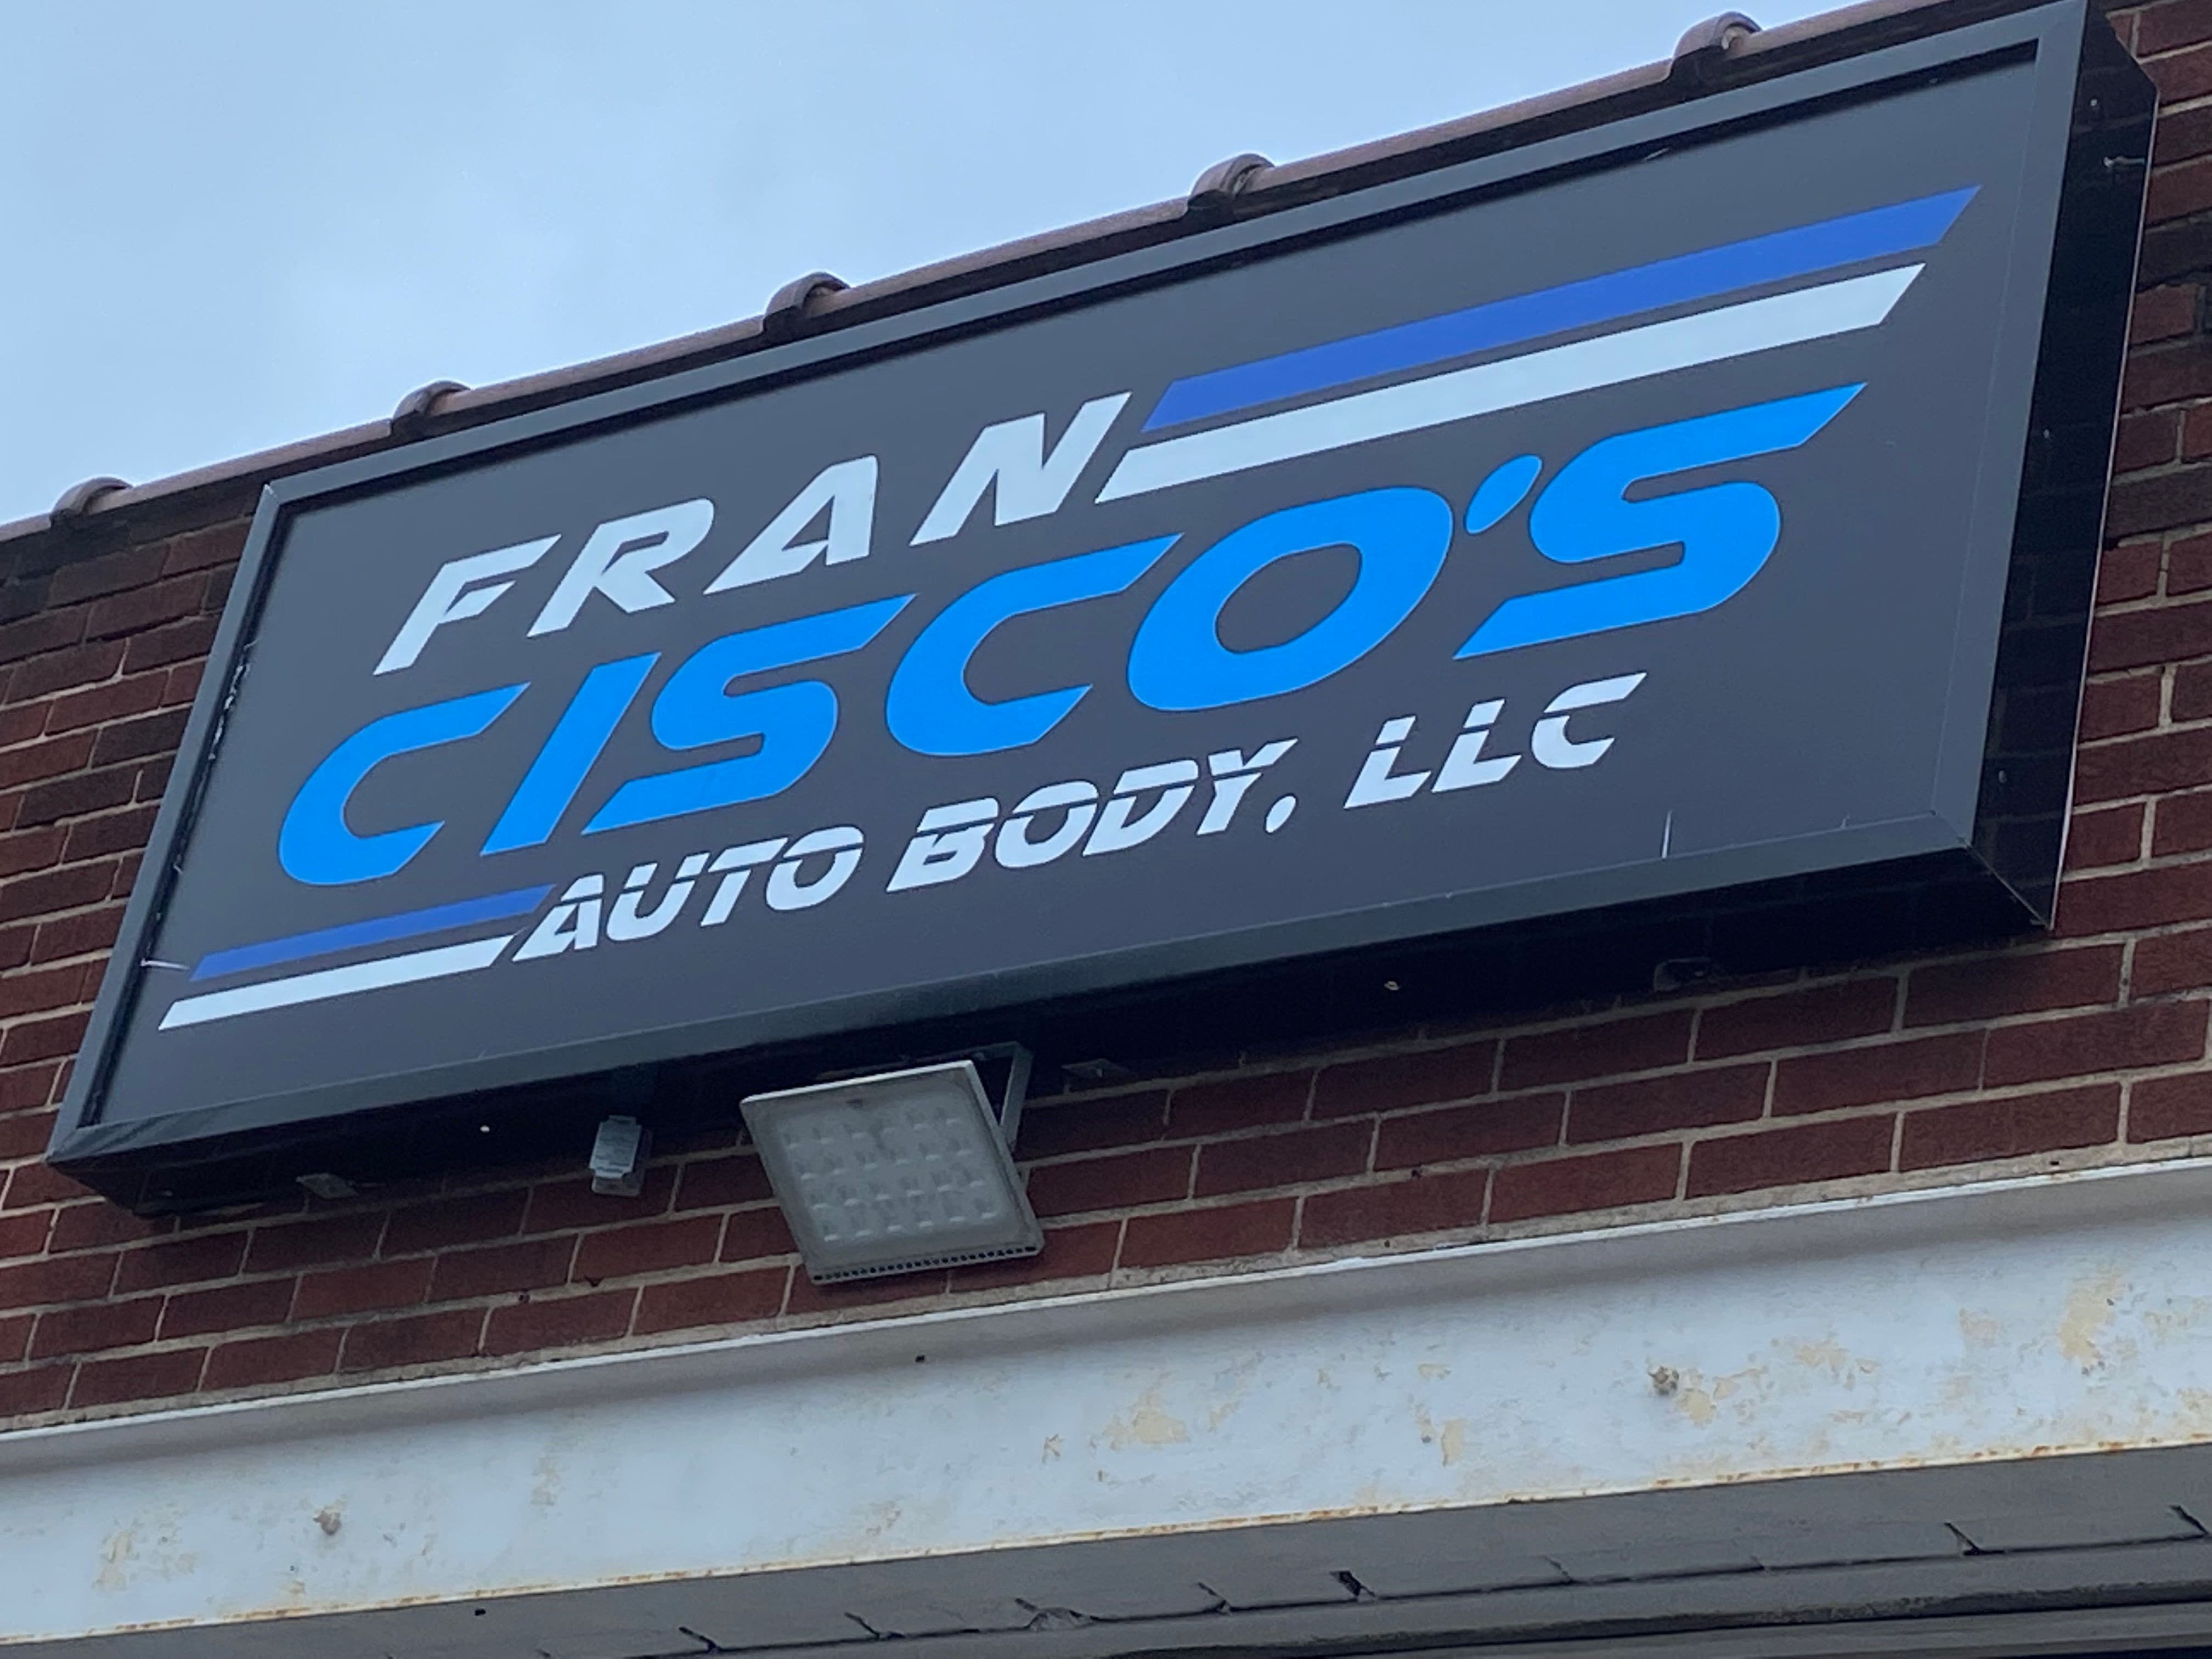 Francisco's Auto Body LLC Sign